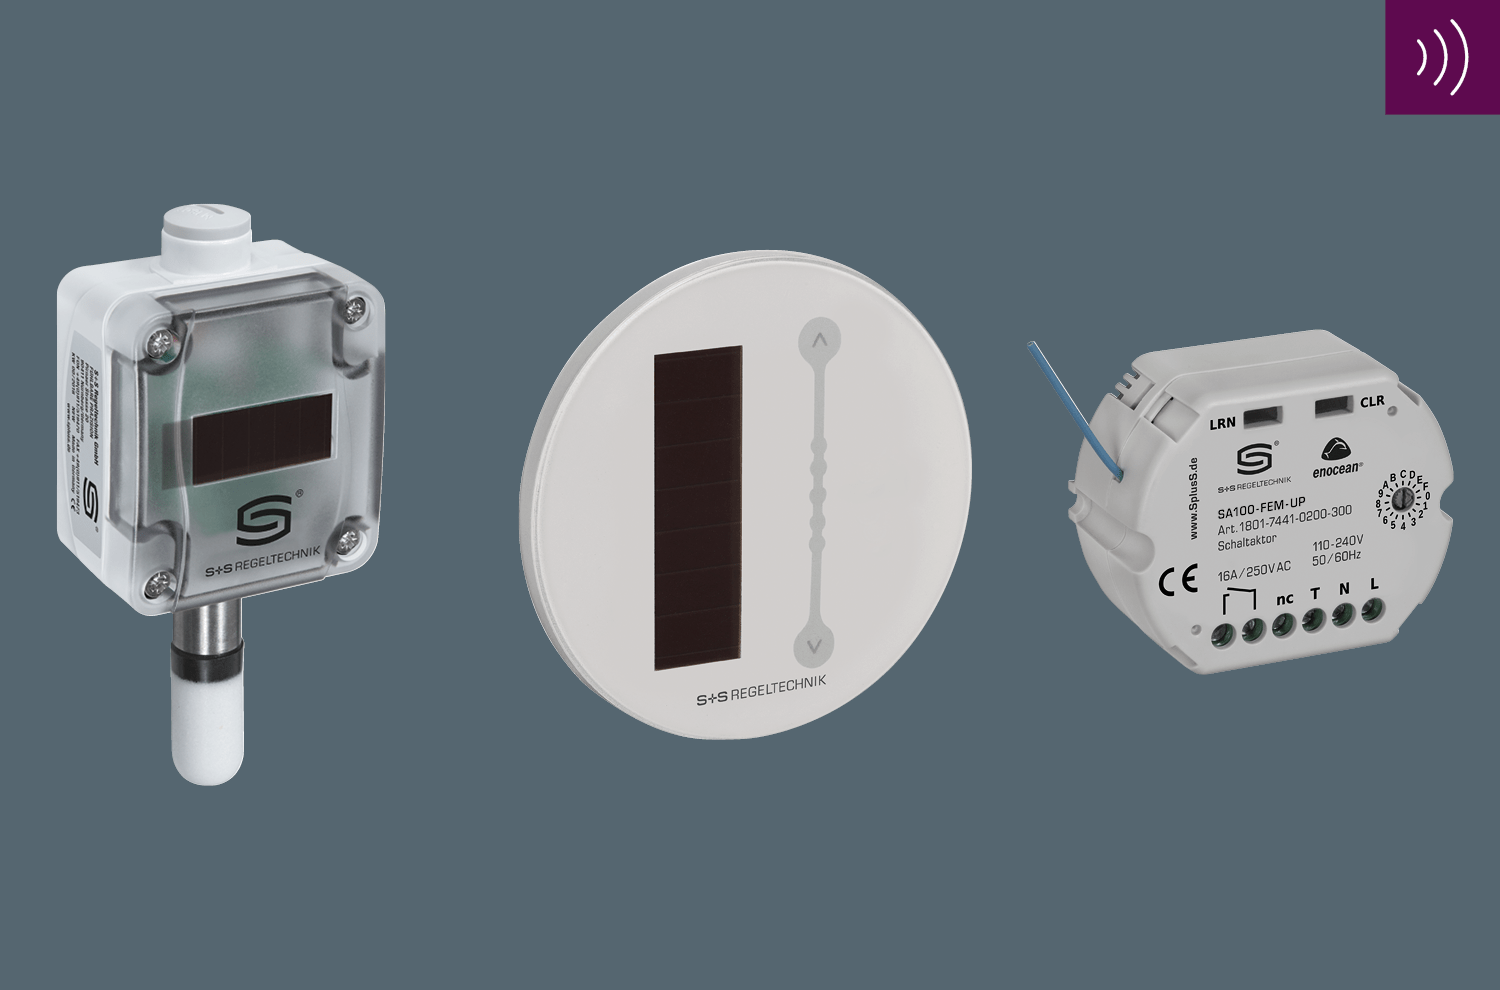 Tre sensori EnOcean su sfondo grigio scuro. In alto a destra il simbolo della gamma EnOcean